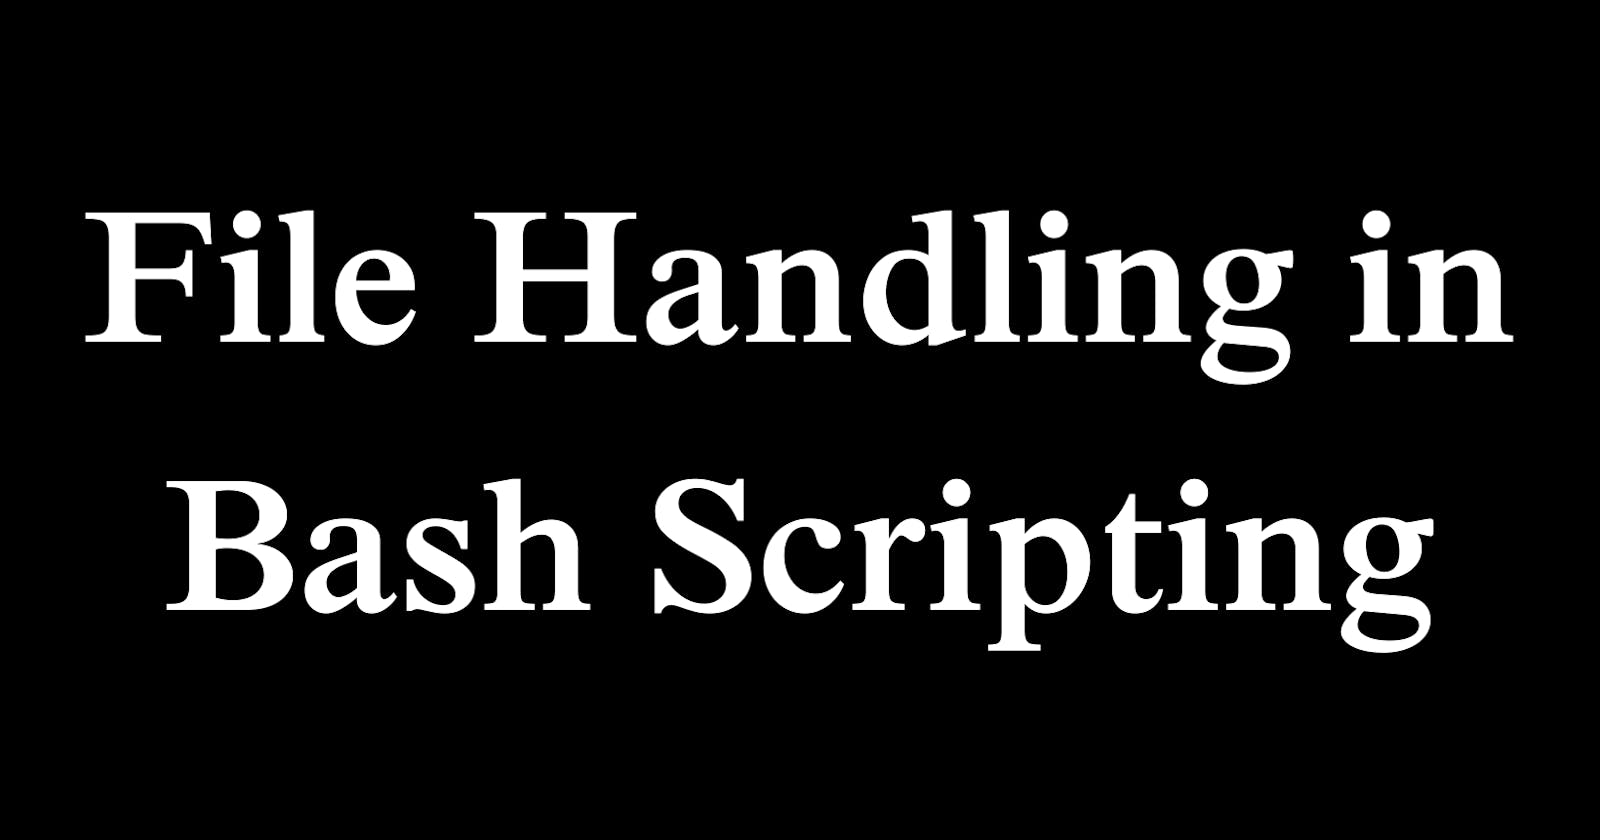 File Handling in Bash Scripting